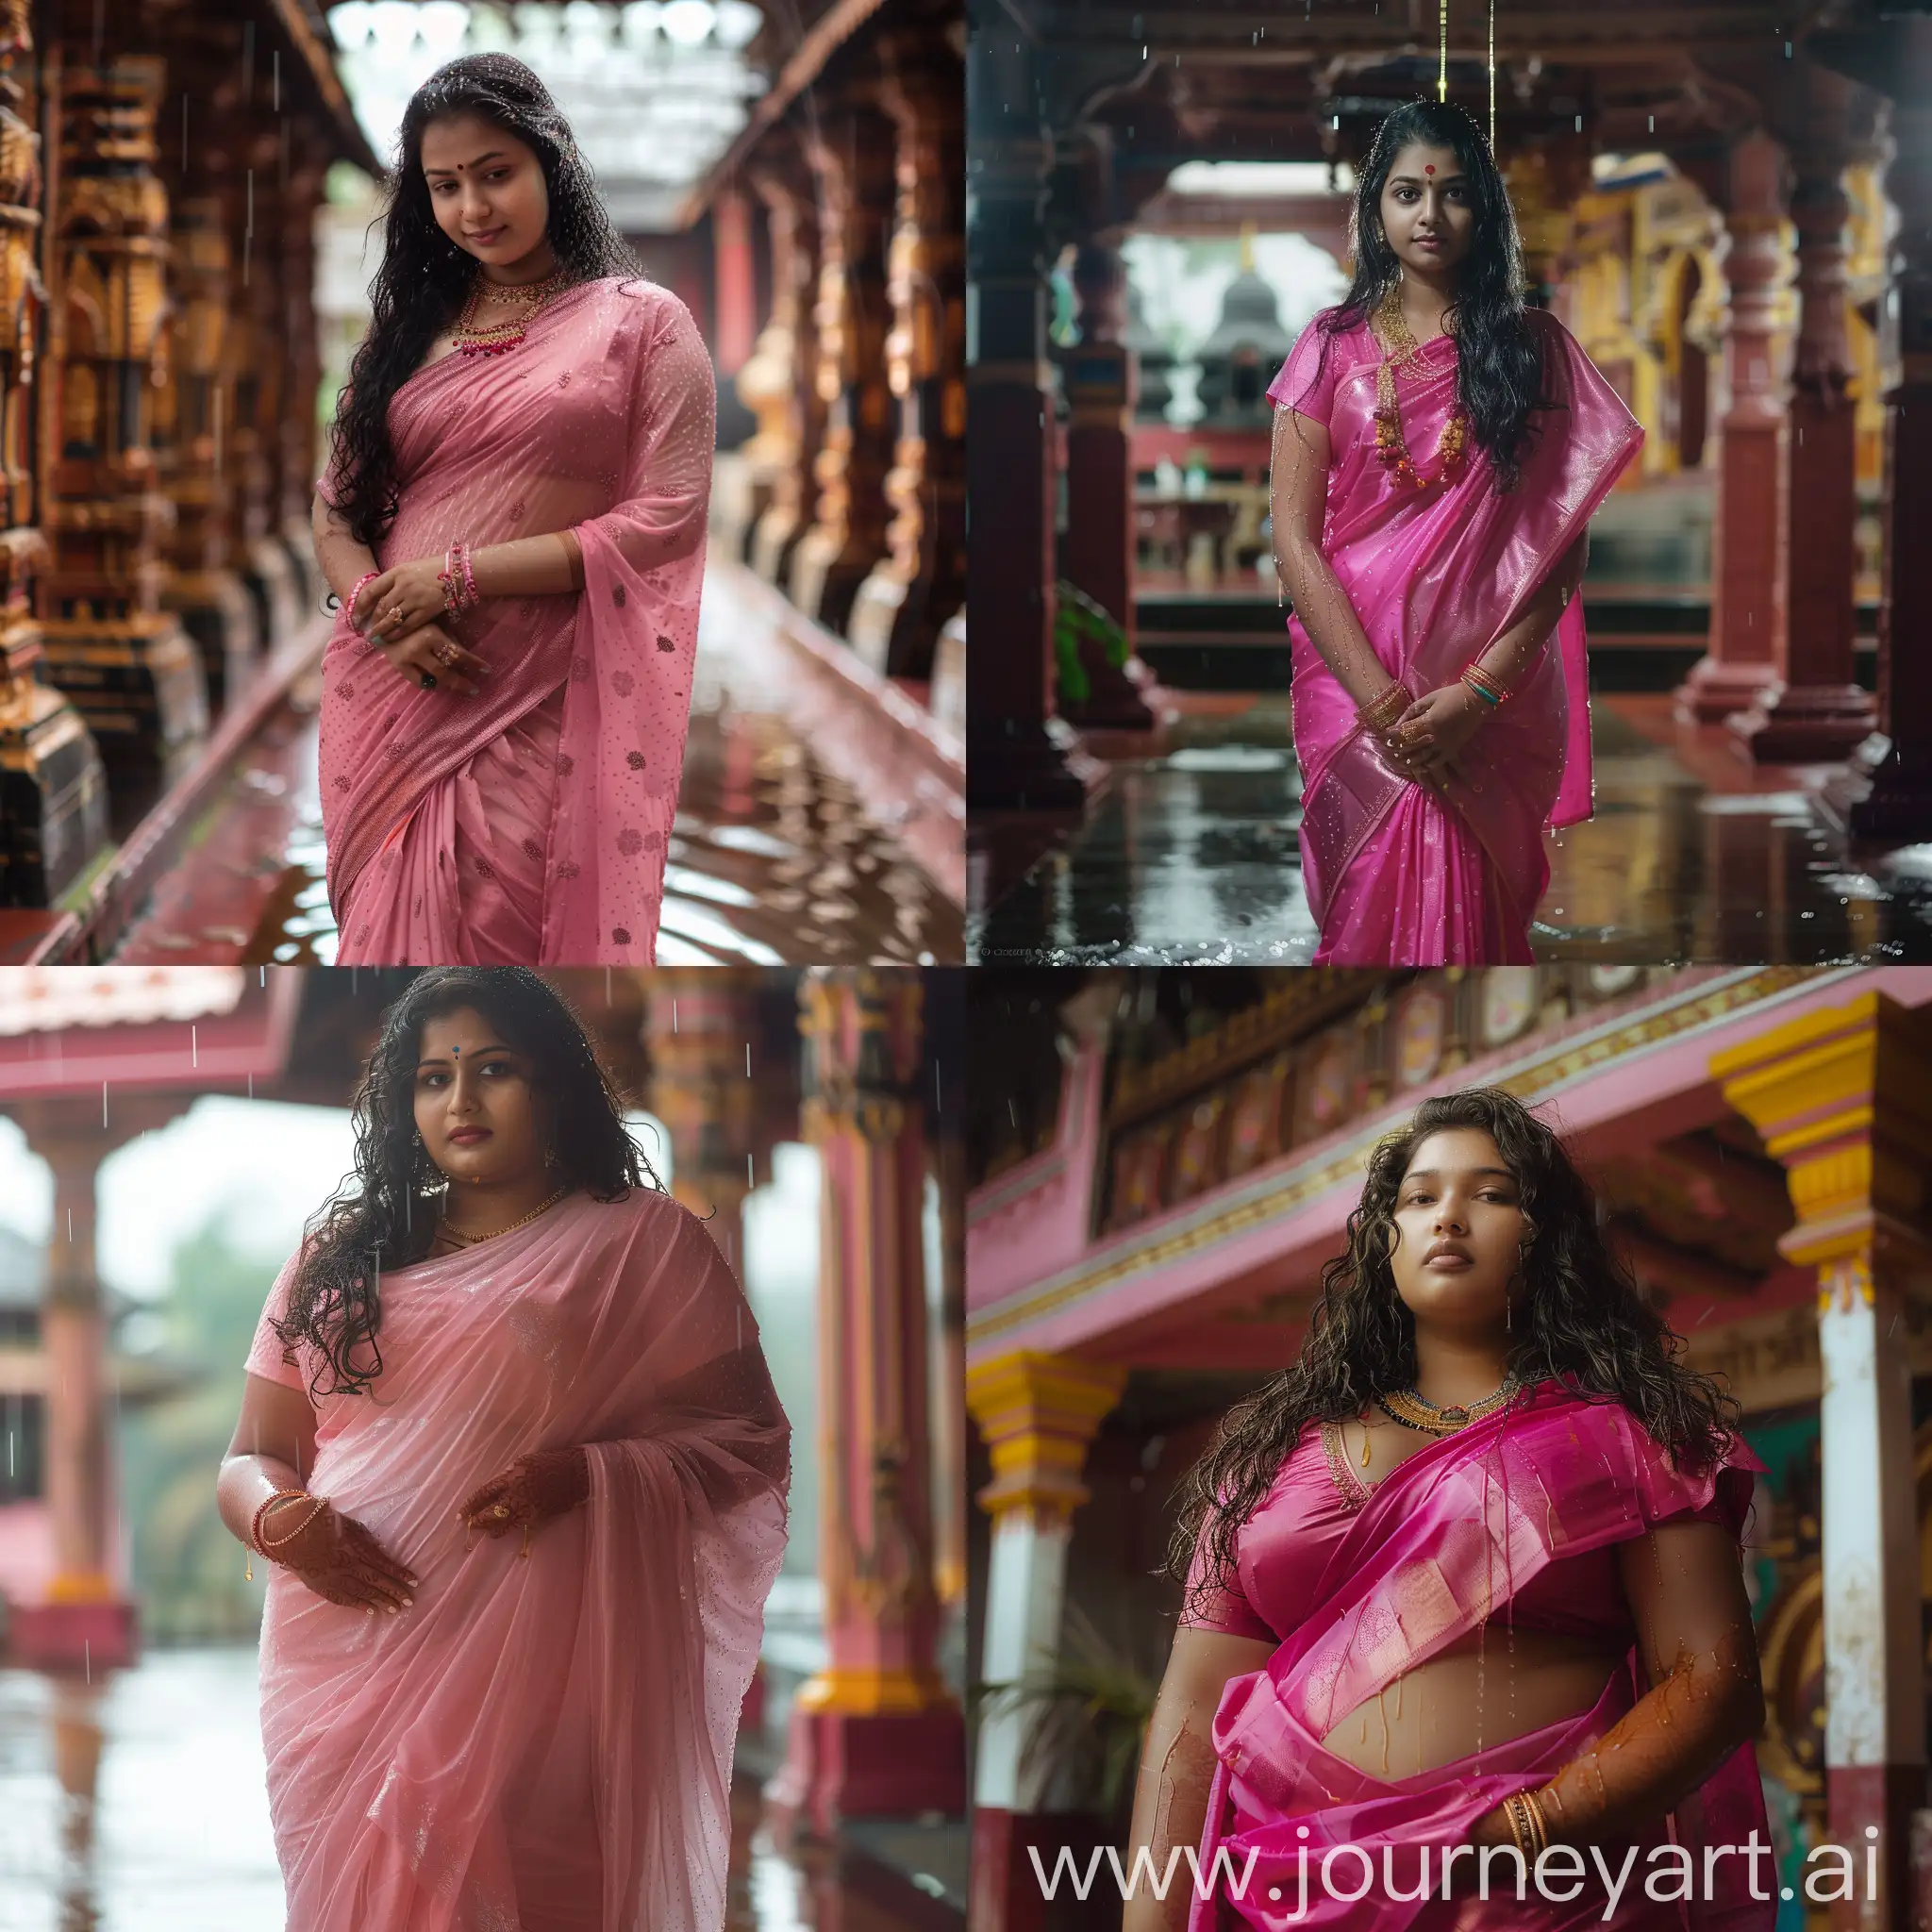 Elegant-Malayali-Teen-in-Pink-Saree-at-Rainy-Temple-Kochi-Kerala